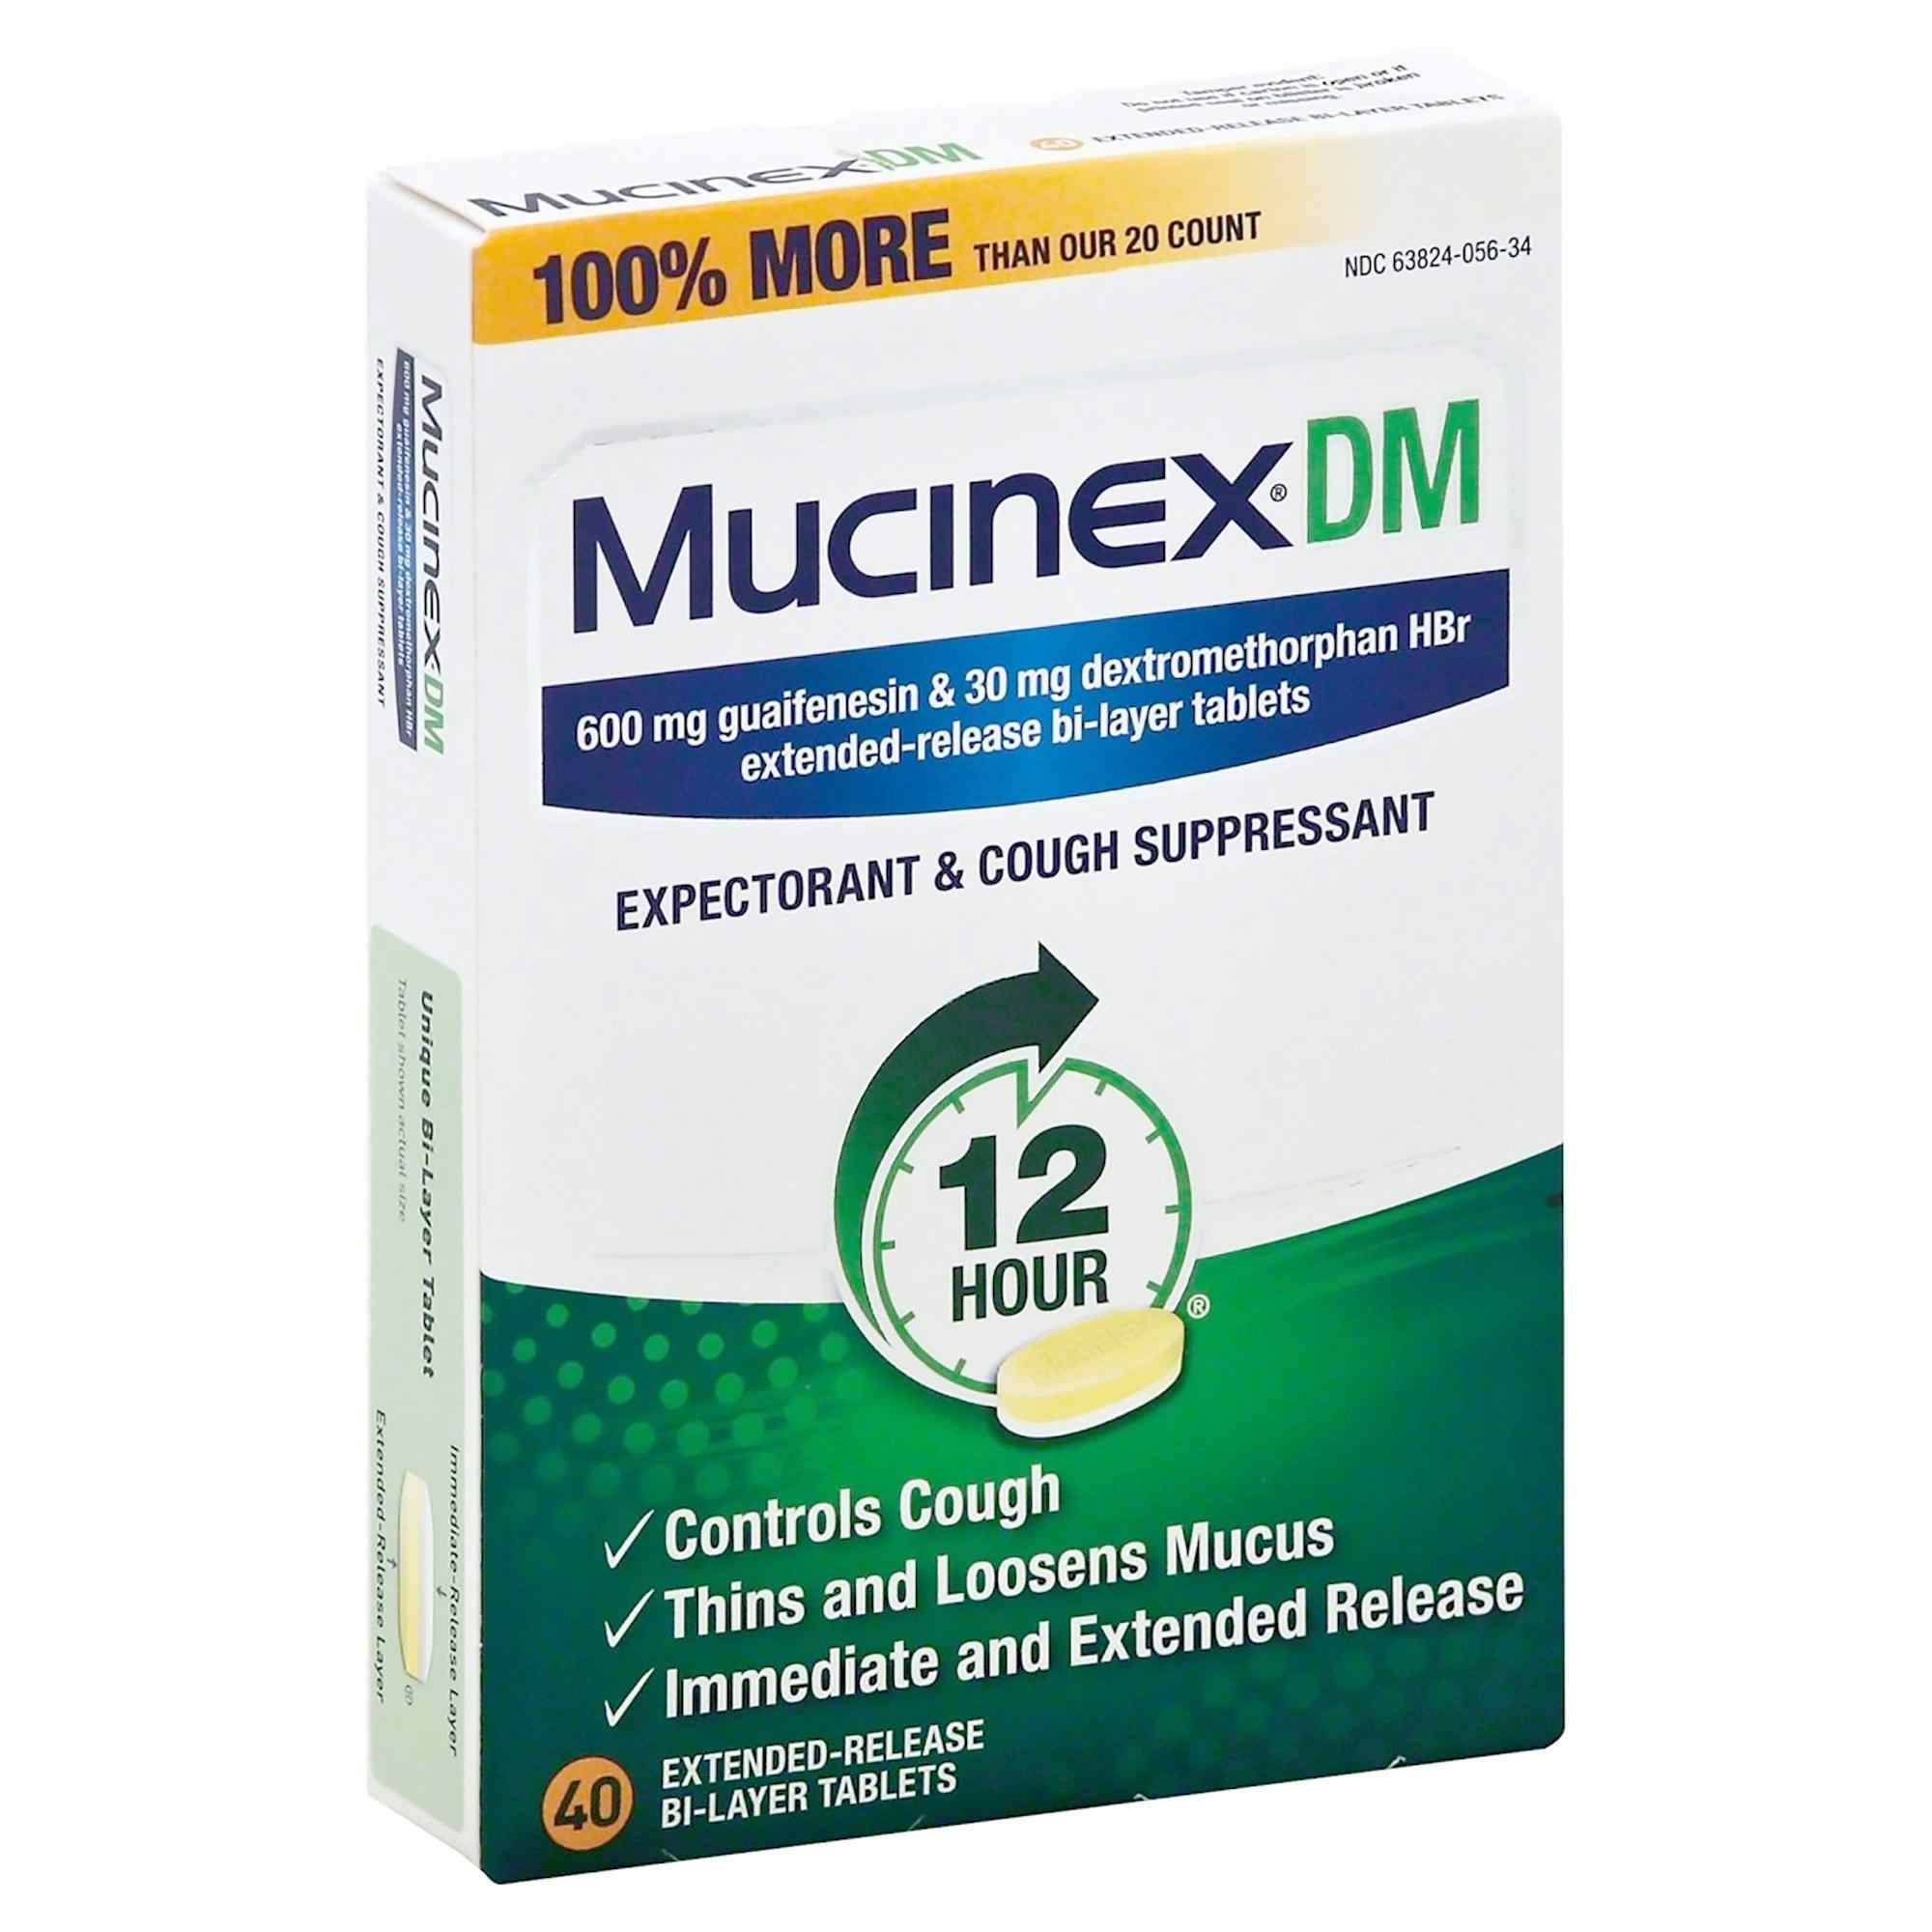 Mucinex DM Expectorant & Cough Suppressant, 600 mg, 63824005634, Box of 40